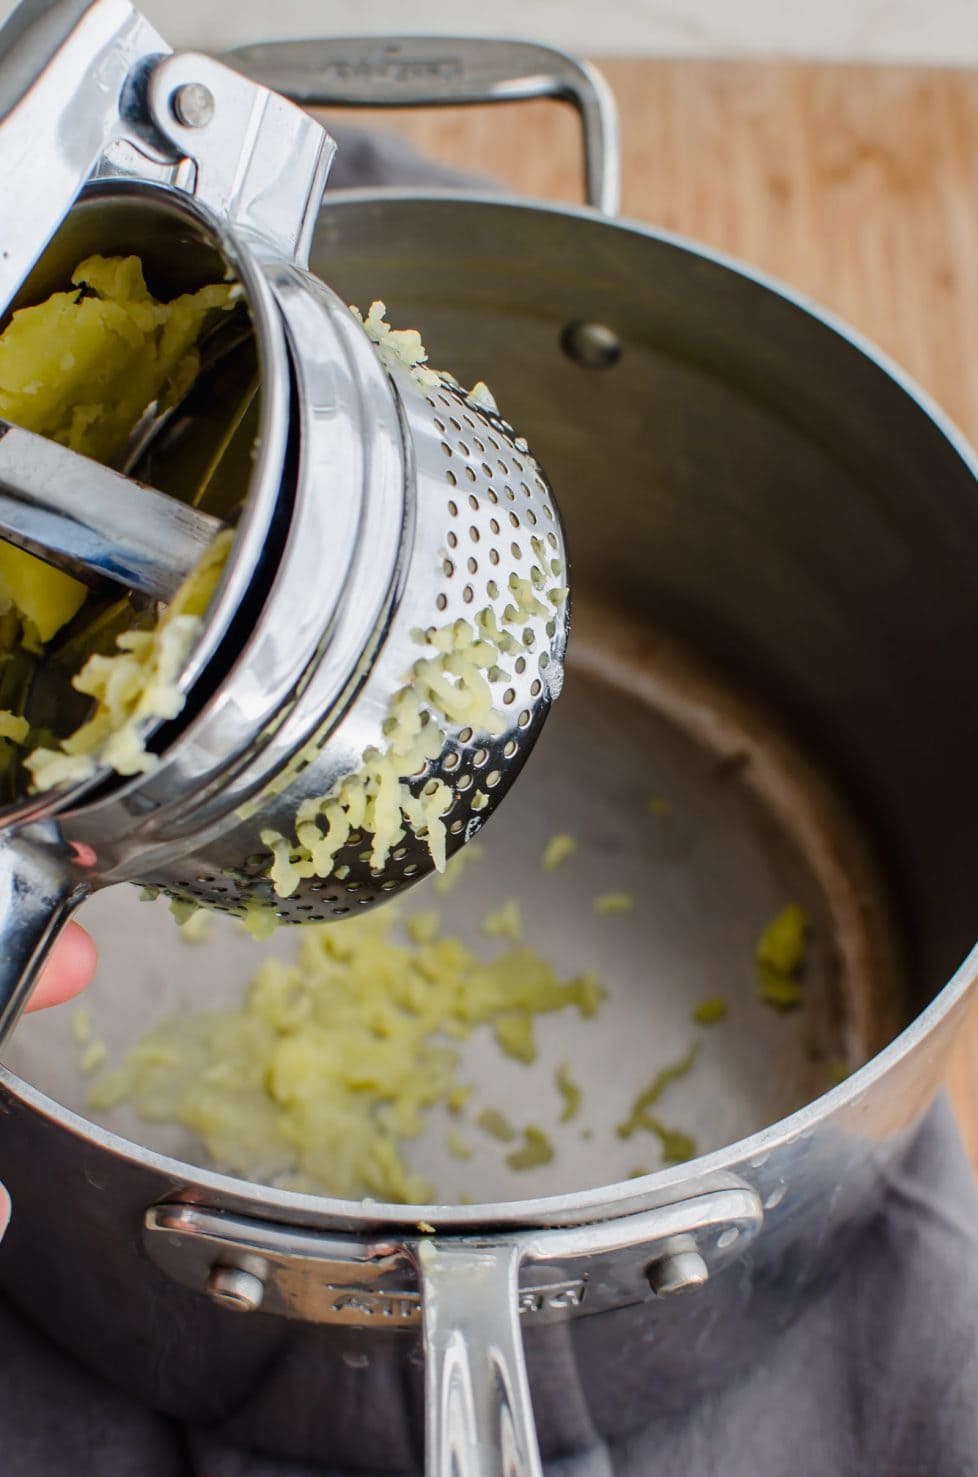 A potato ricer ricing gold potatoes into a mixing bowl.